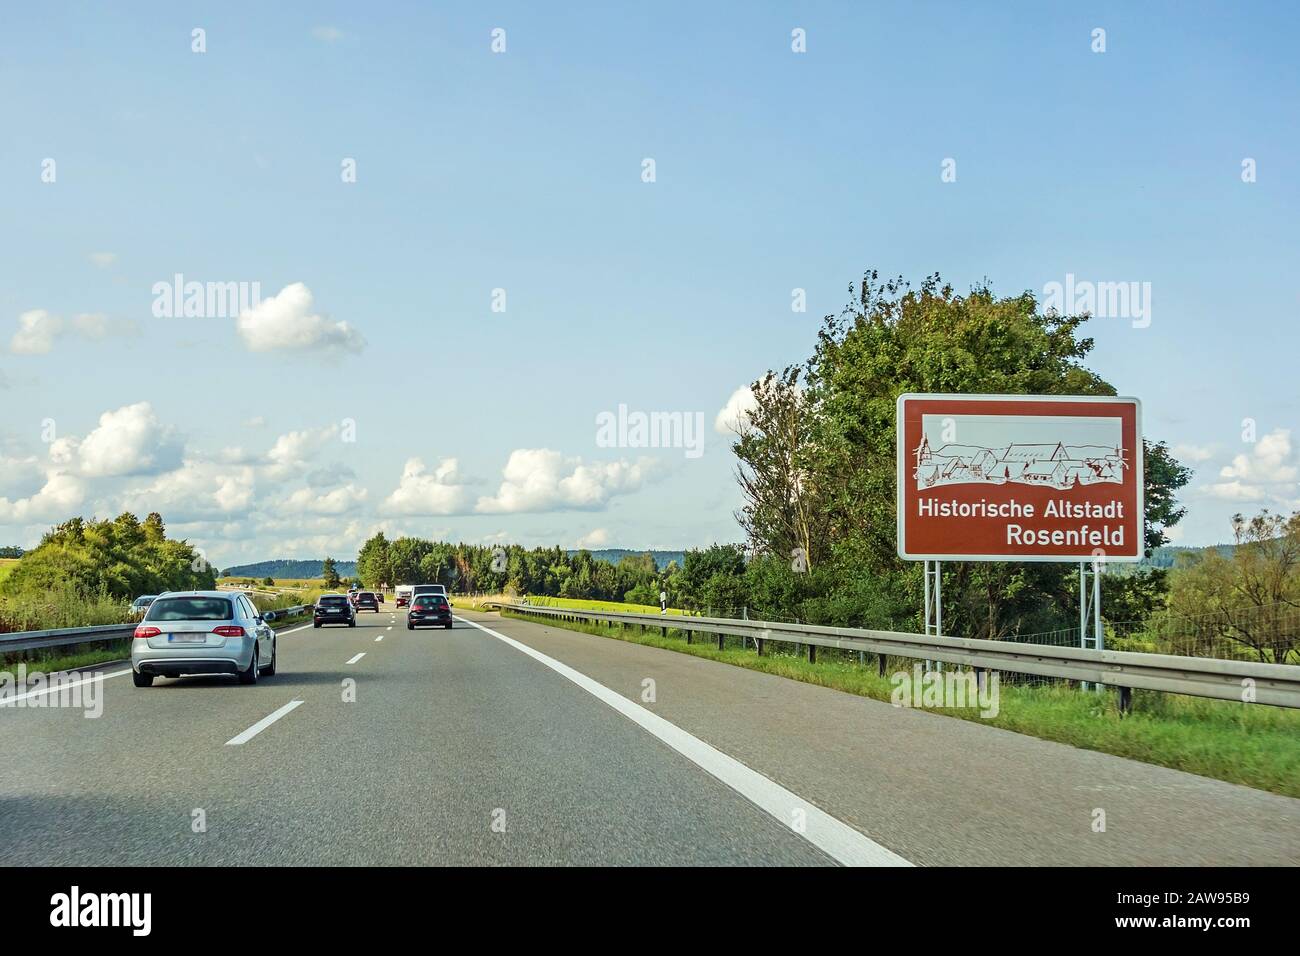 road sign Rosenfeld historic city 'Historische Altstadt Rosenfeld' at freeway, german Autobahn Stock Photo